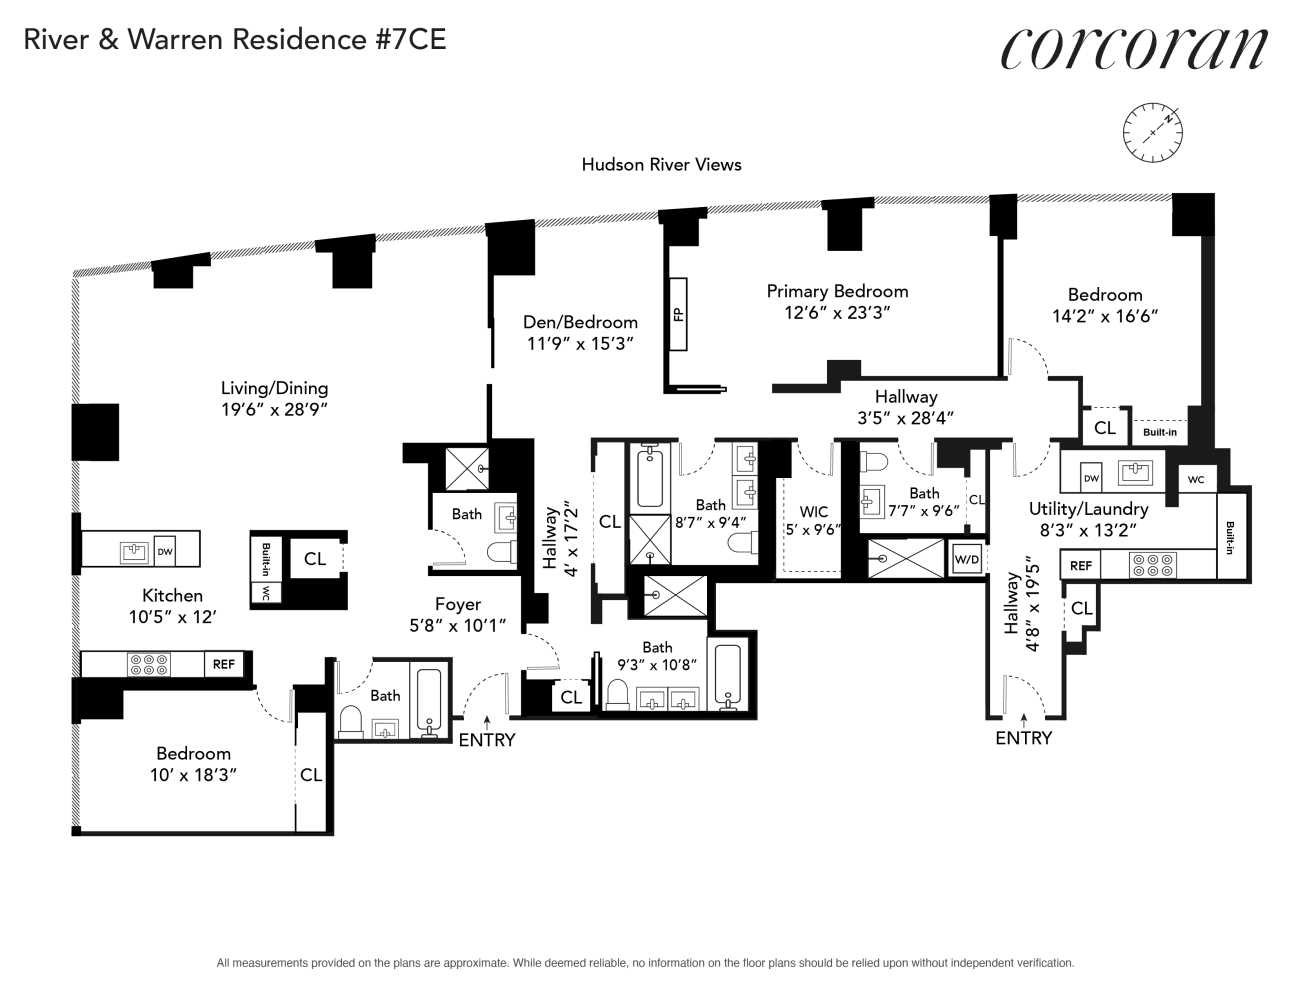 Floorplan for 212 Warren Street, 7CE